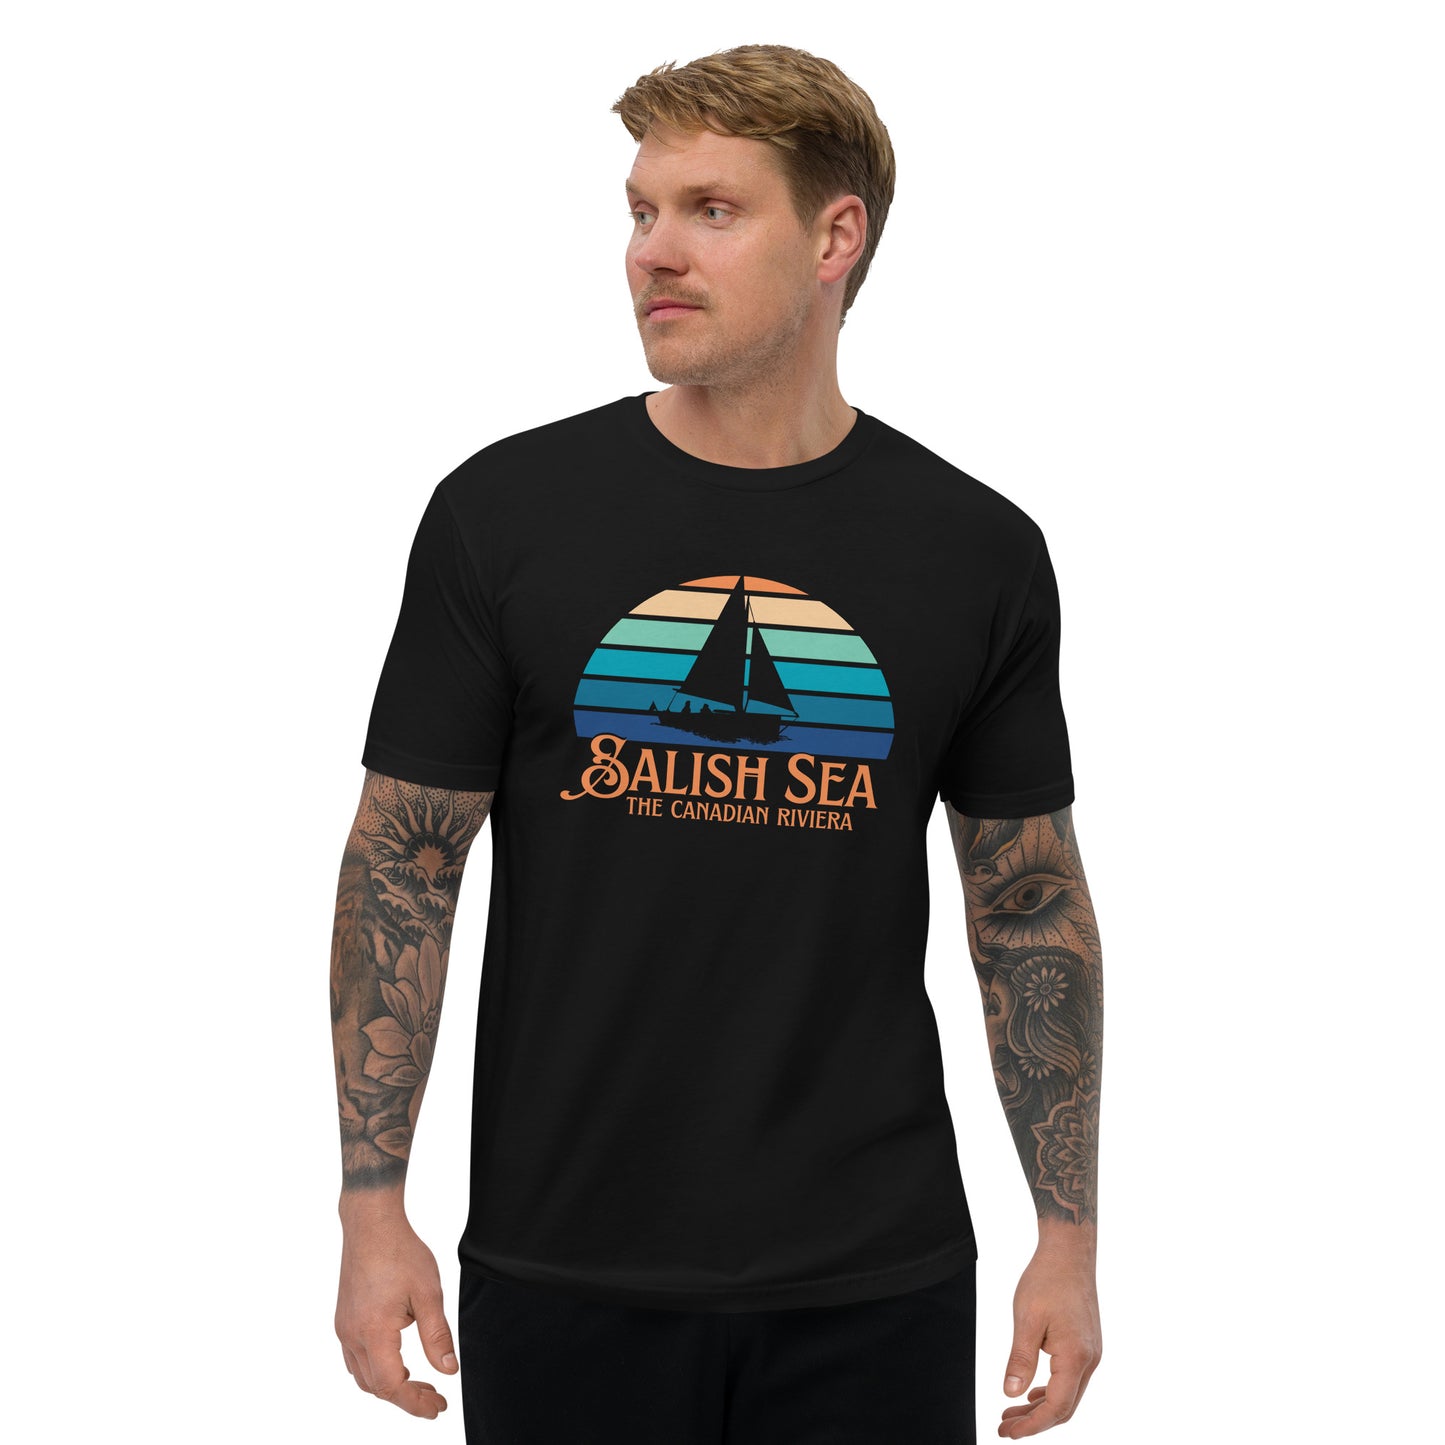 Adult - "Canadian Riviera" - Short Sleeve T-shirt